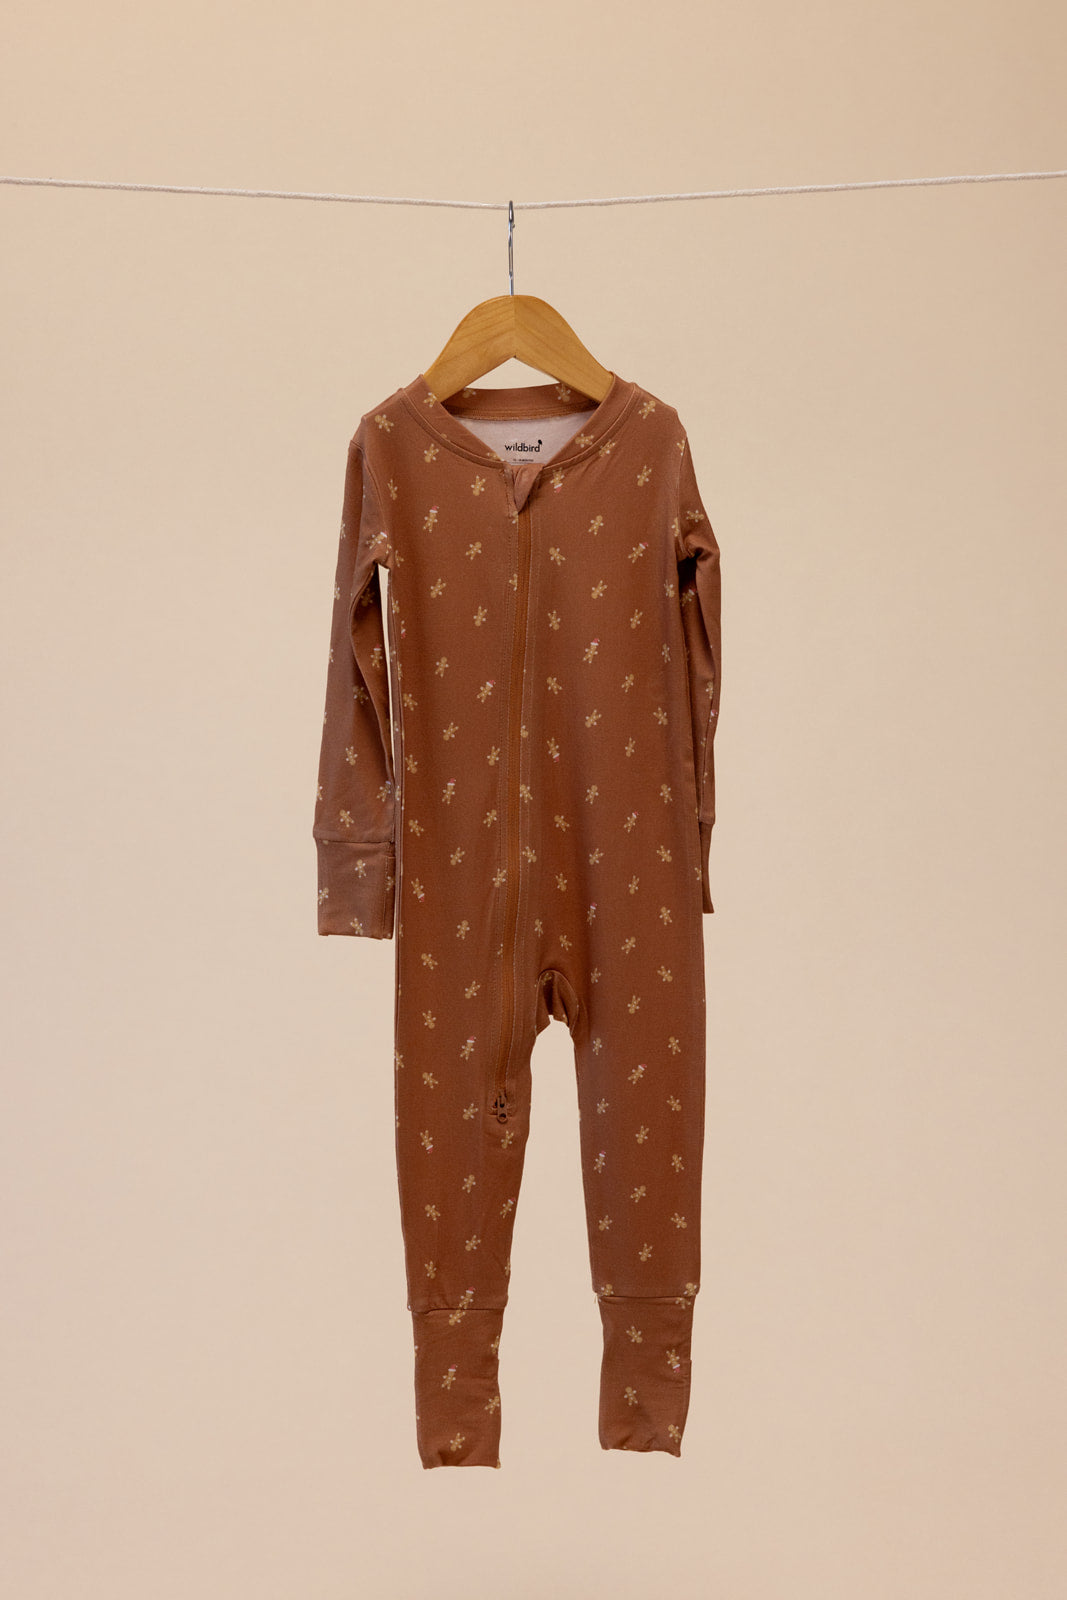 Ralphie - CloudBlend™ Footless Pajamas